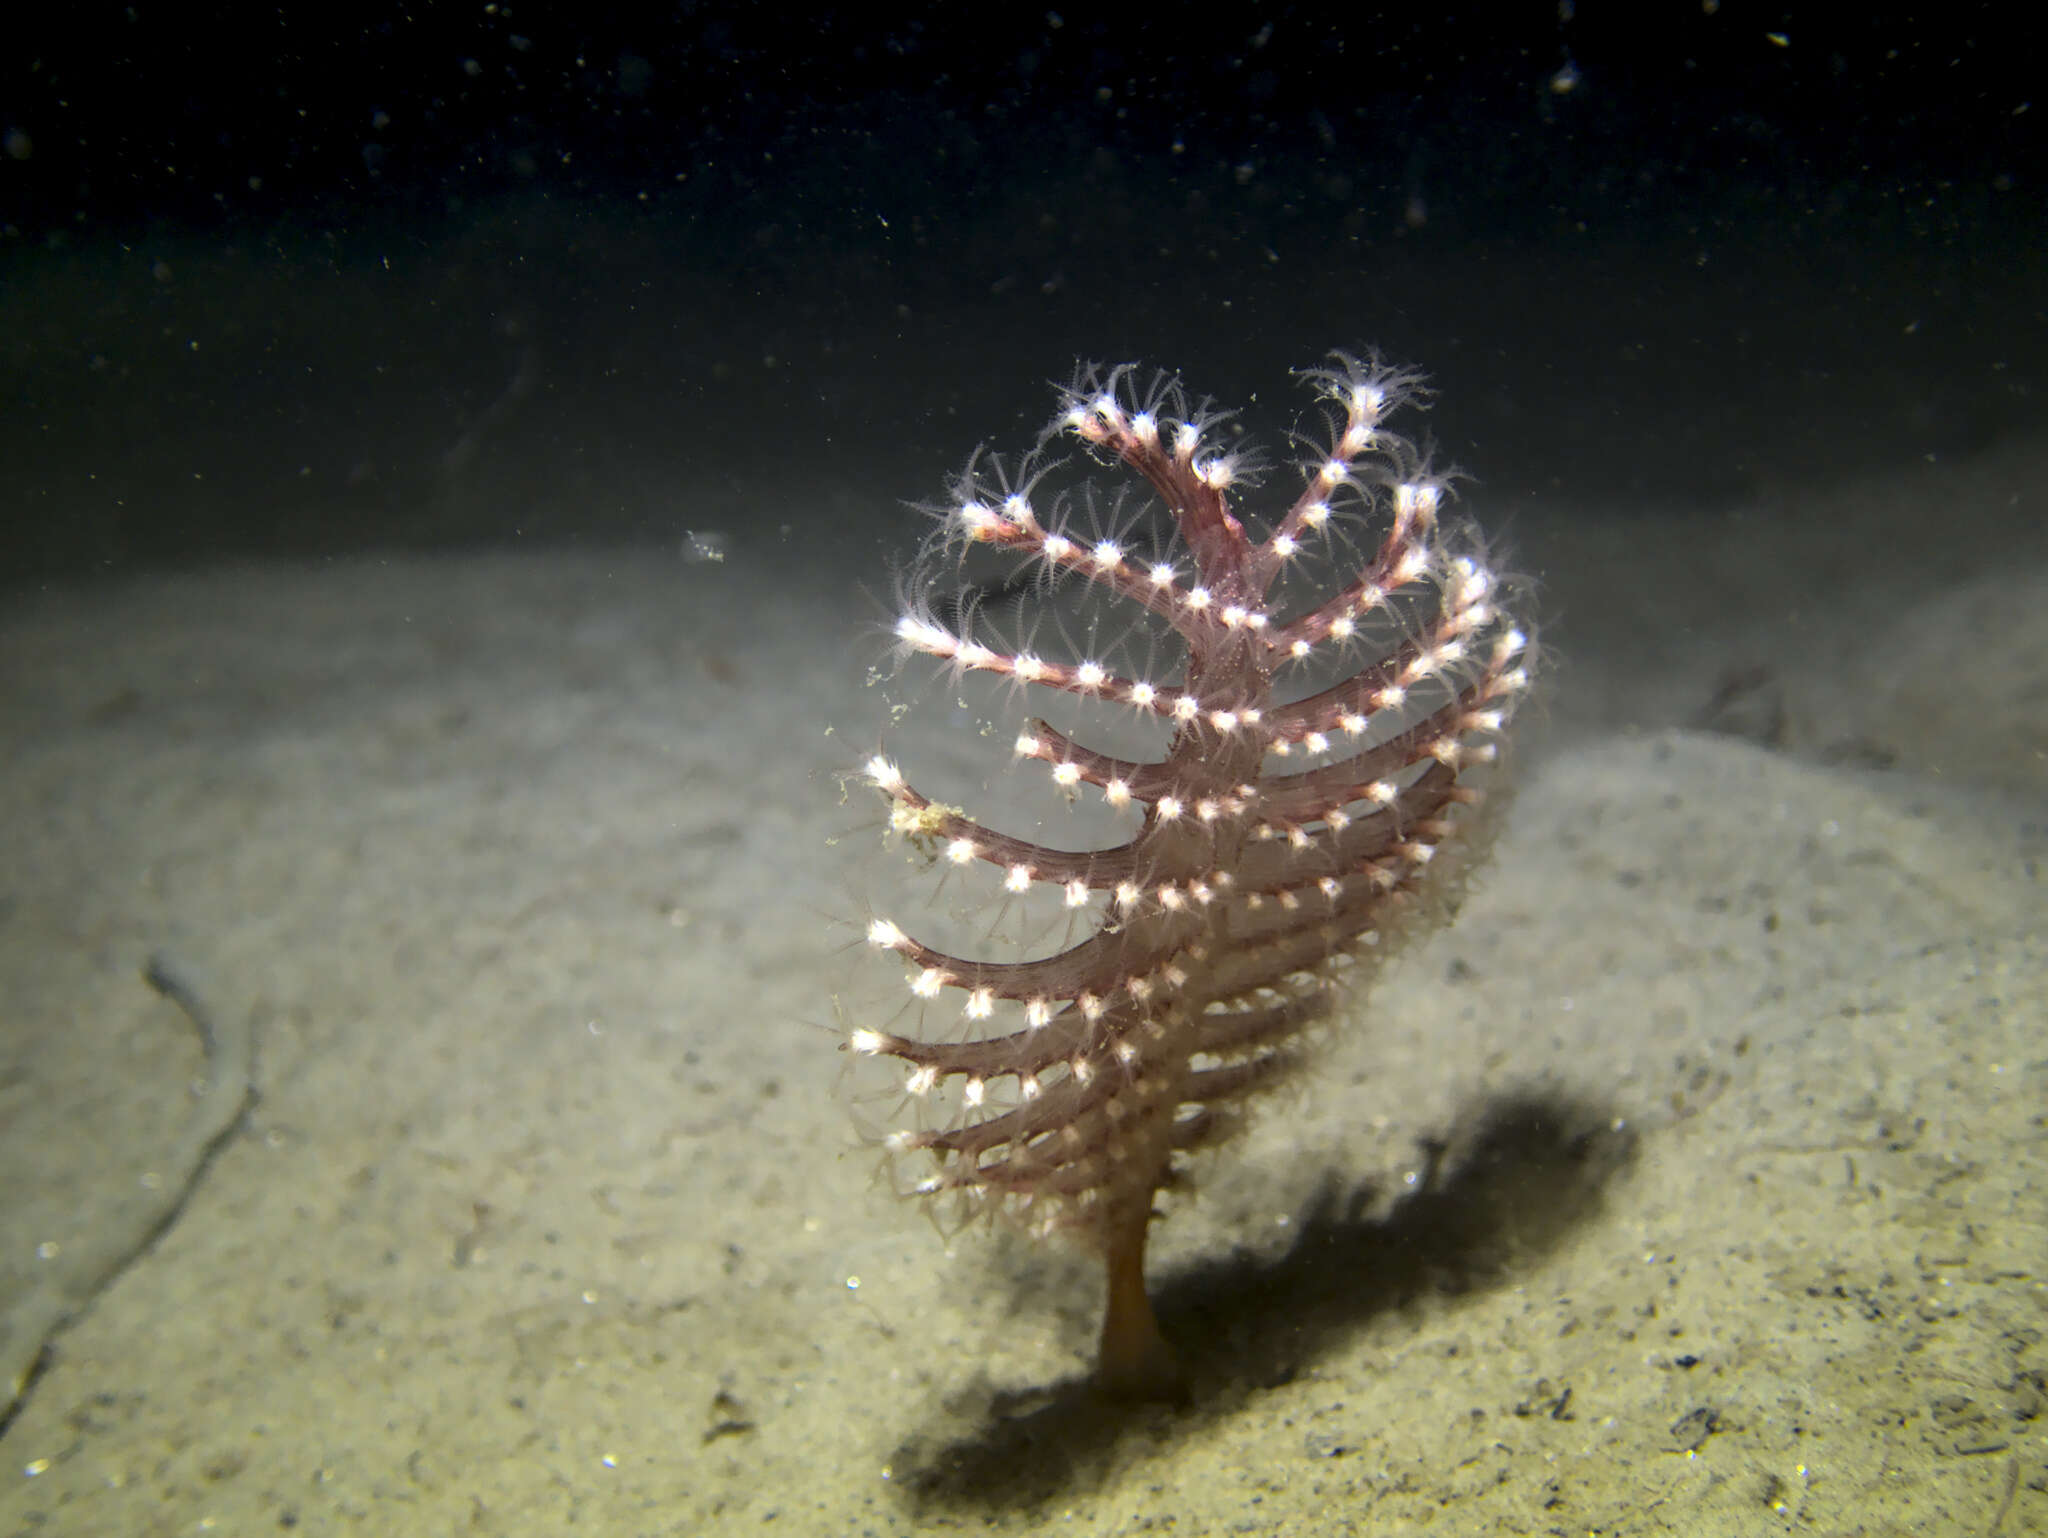 Image of luminescent sea-pen